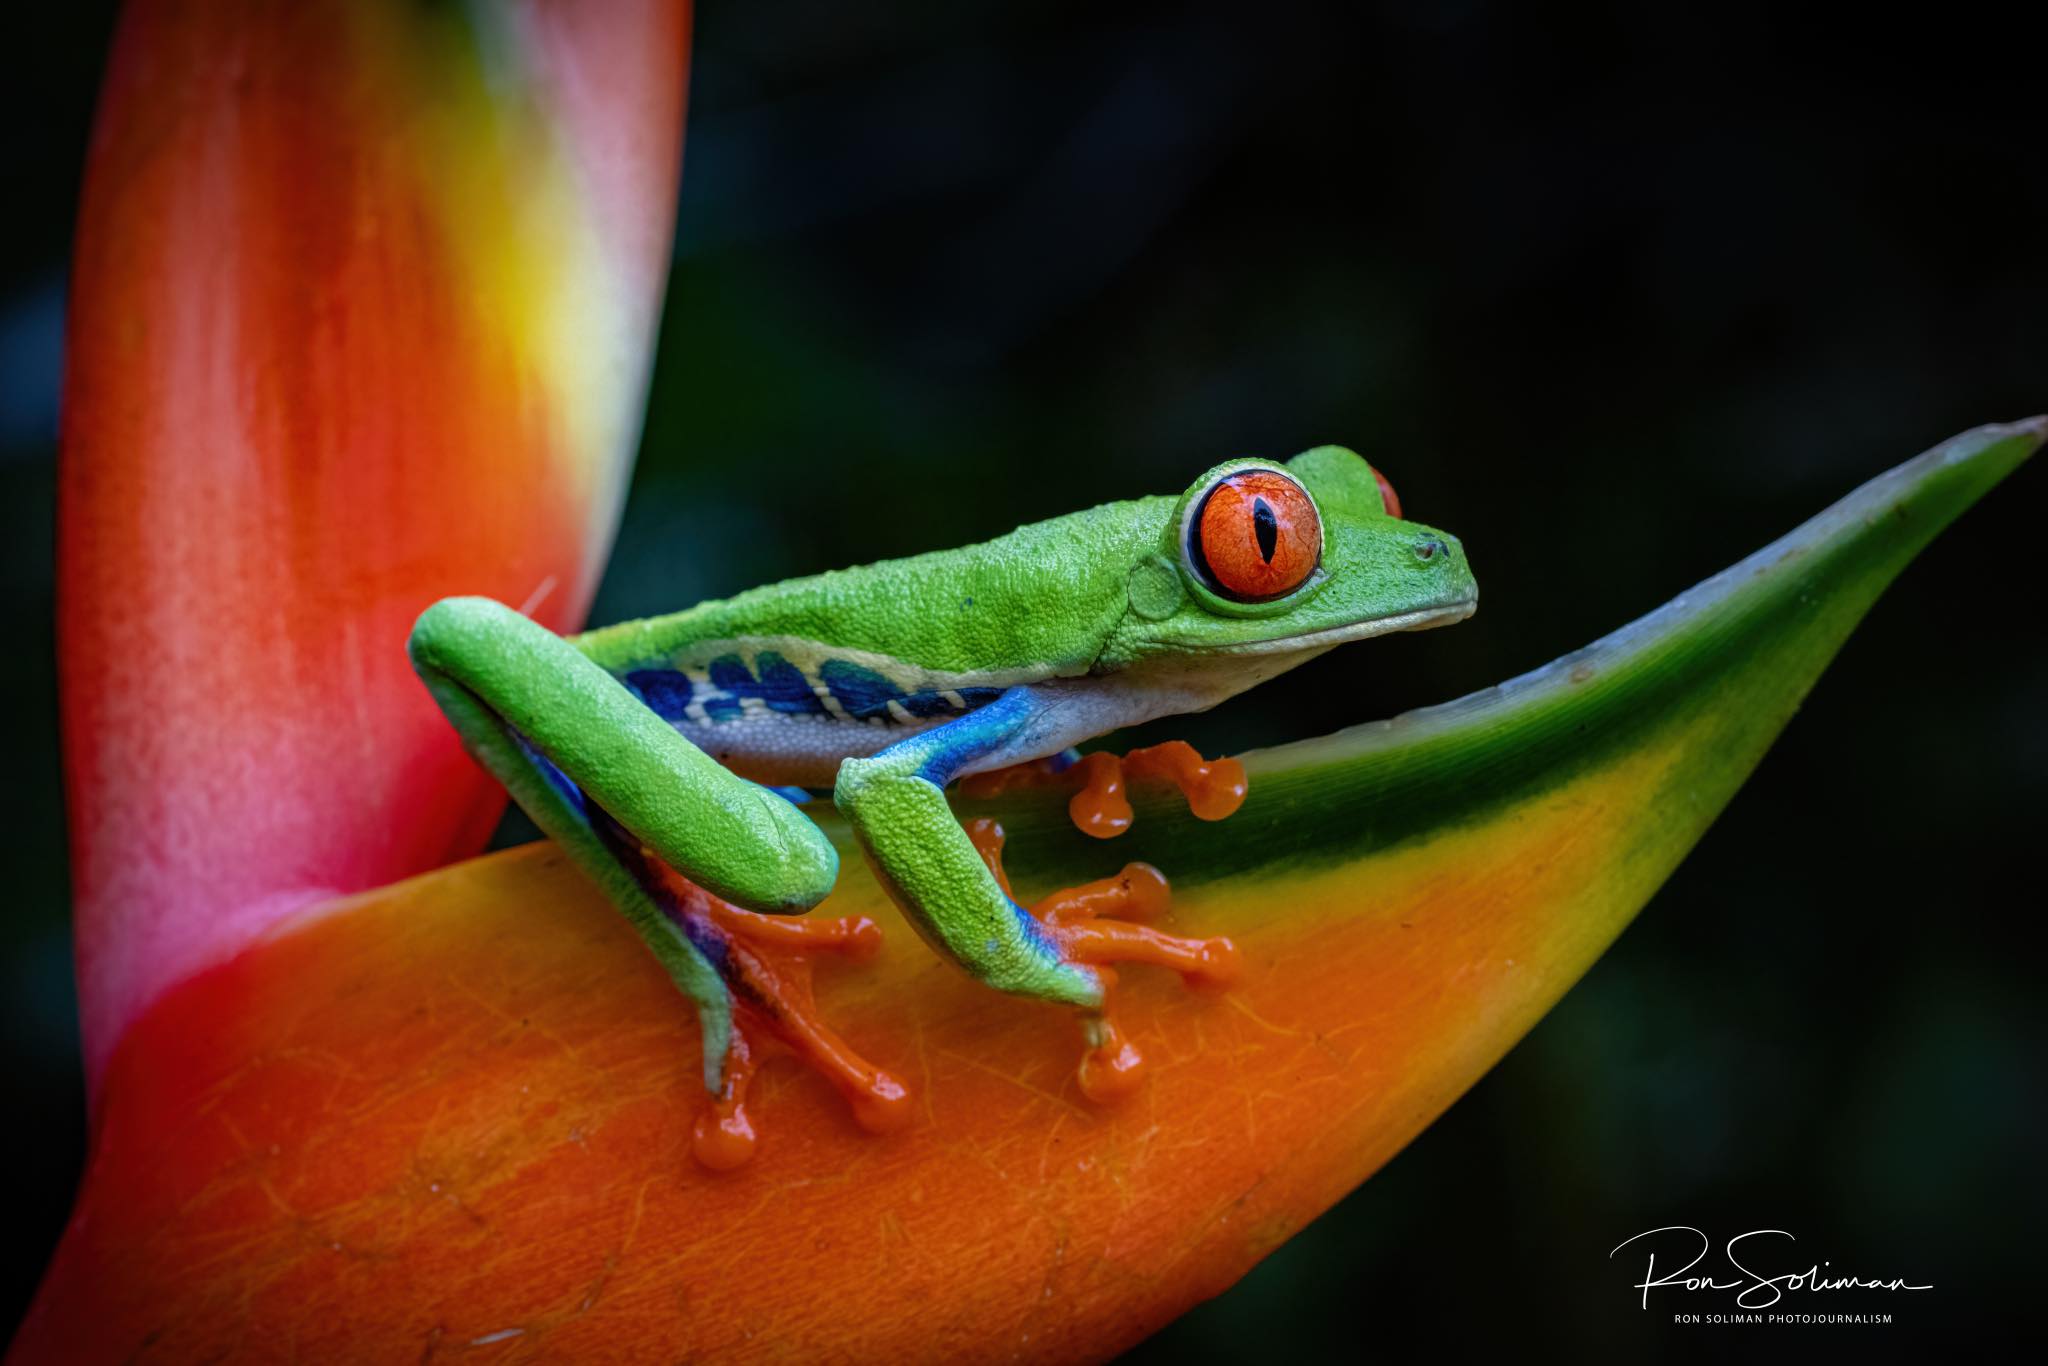 Costa Rica Wildlife - Best Earth Day photos